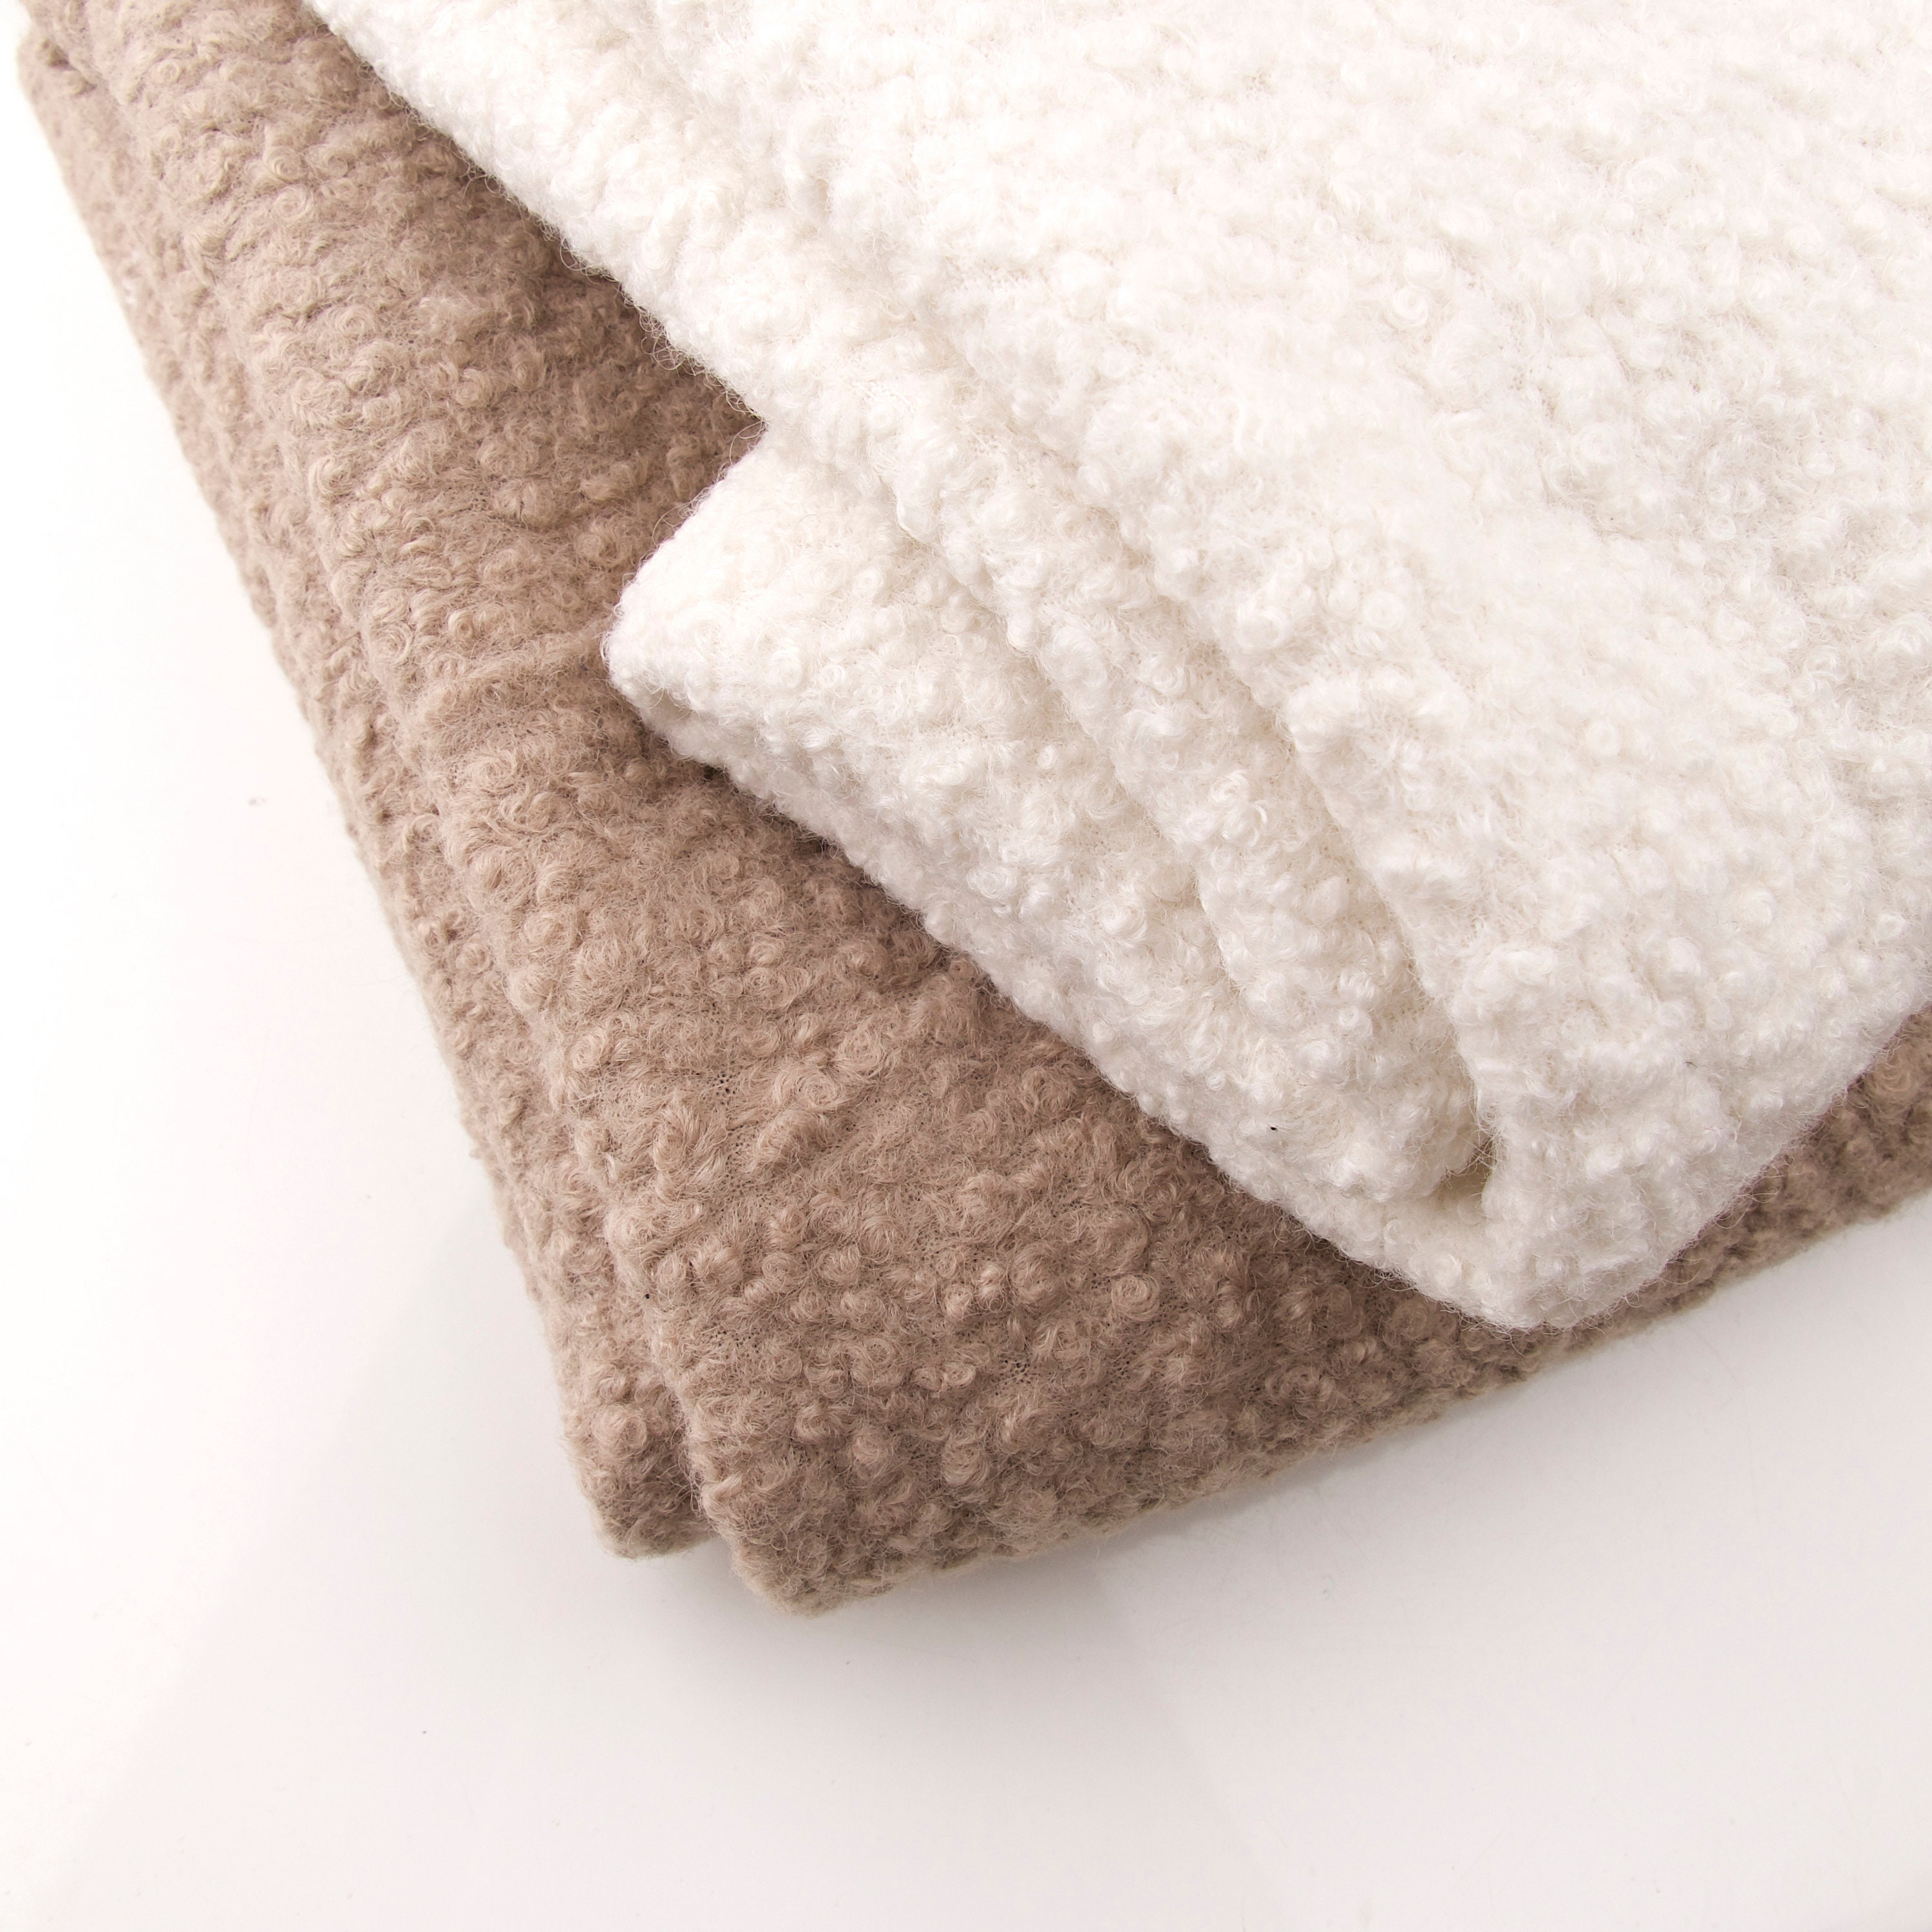 Swedish Kitchen Towels - Sheep - Black - Esthetic Living